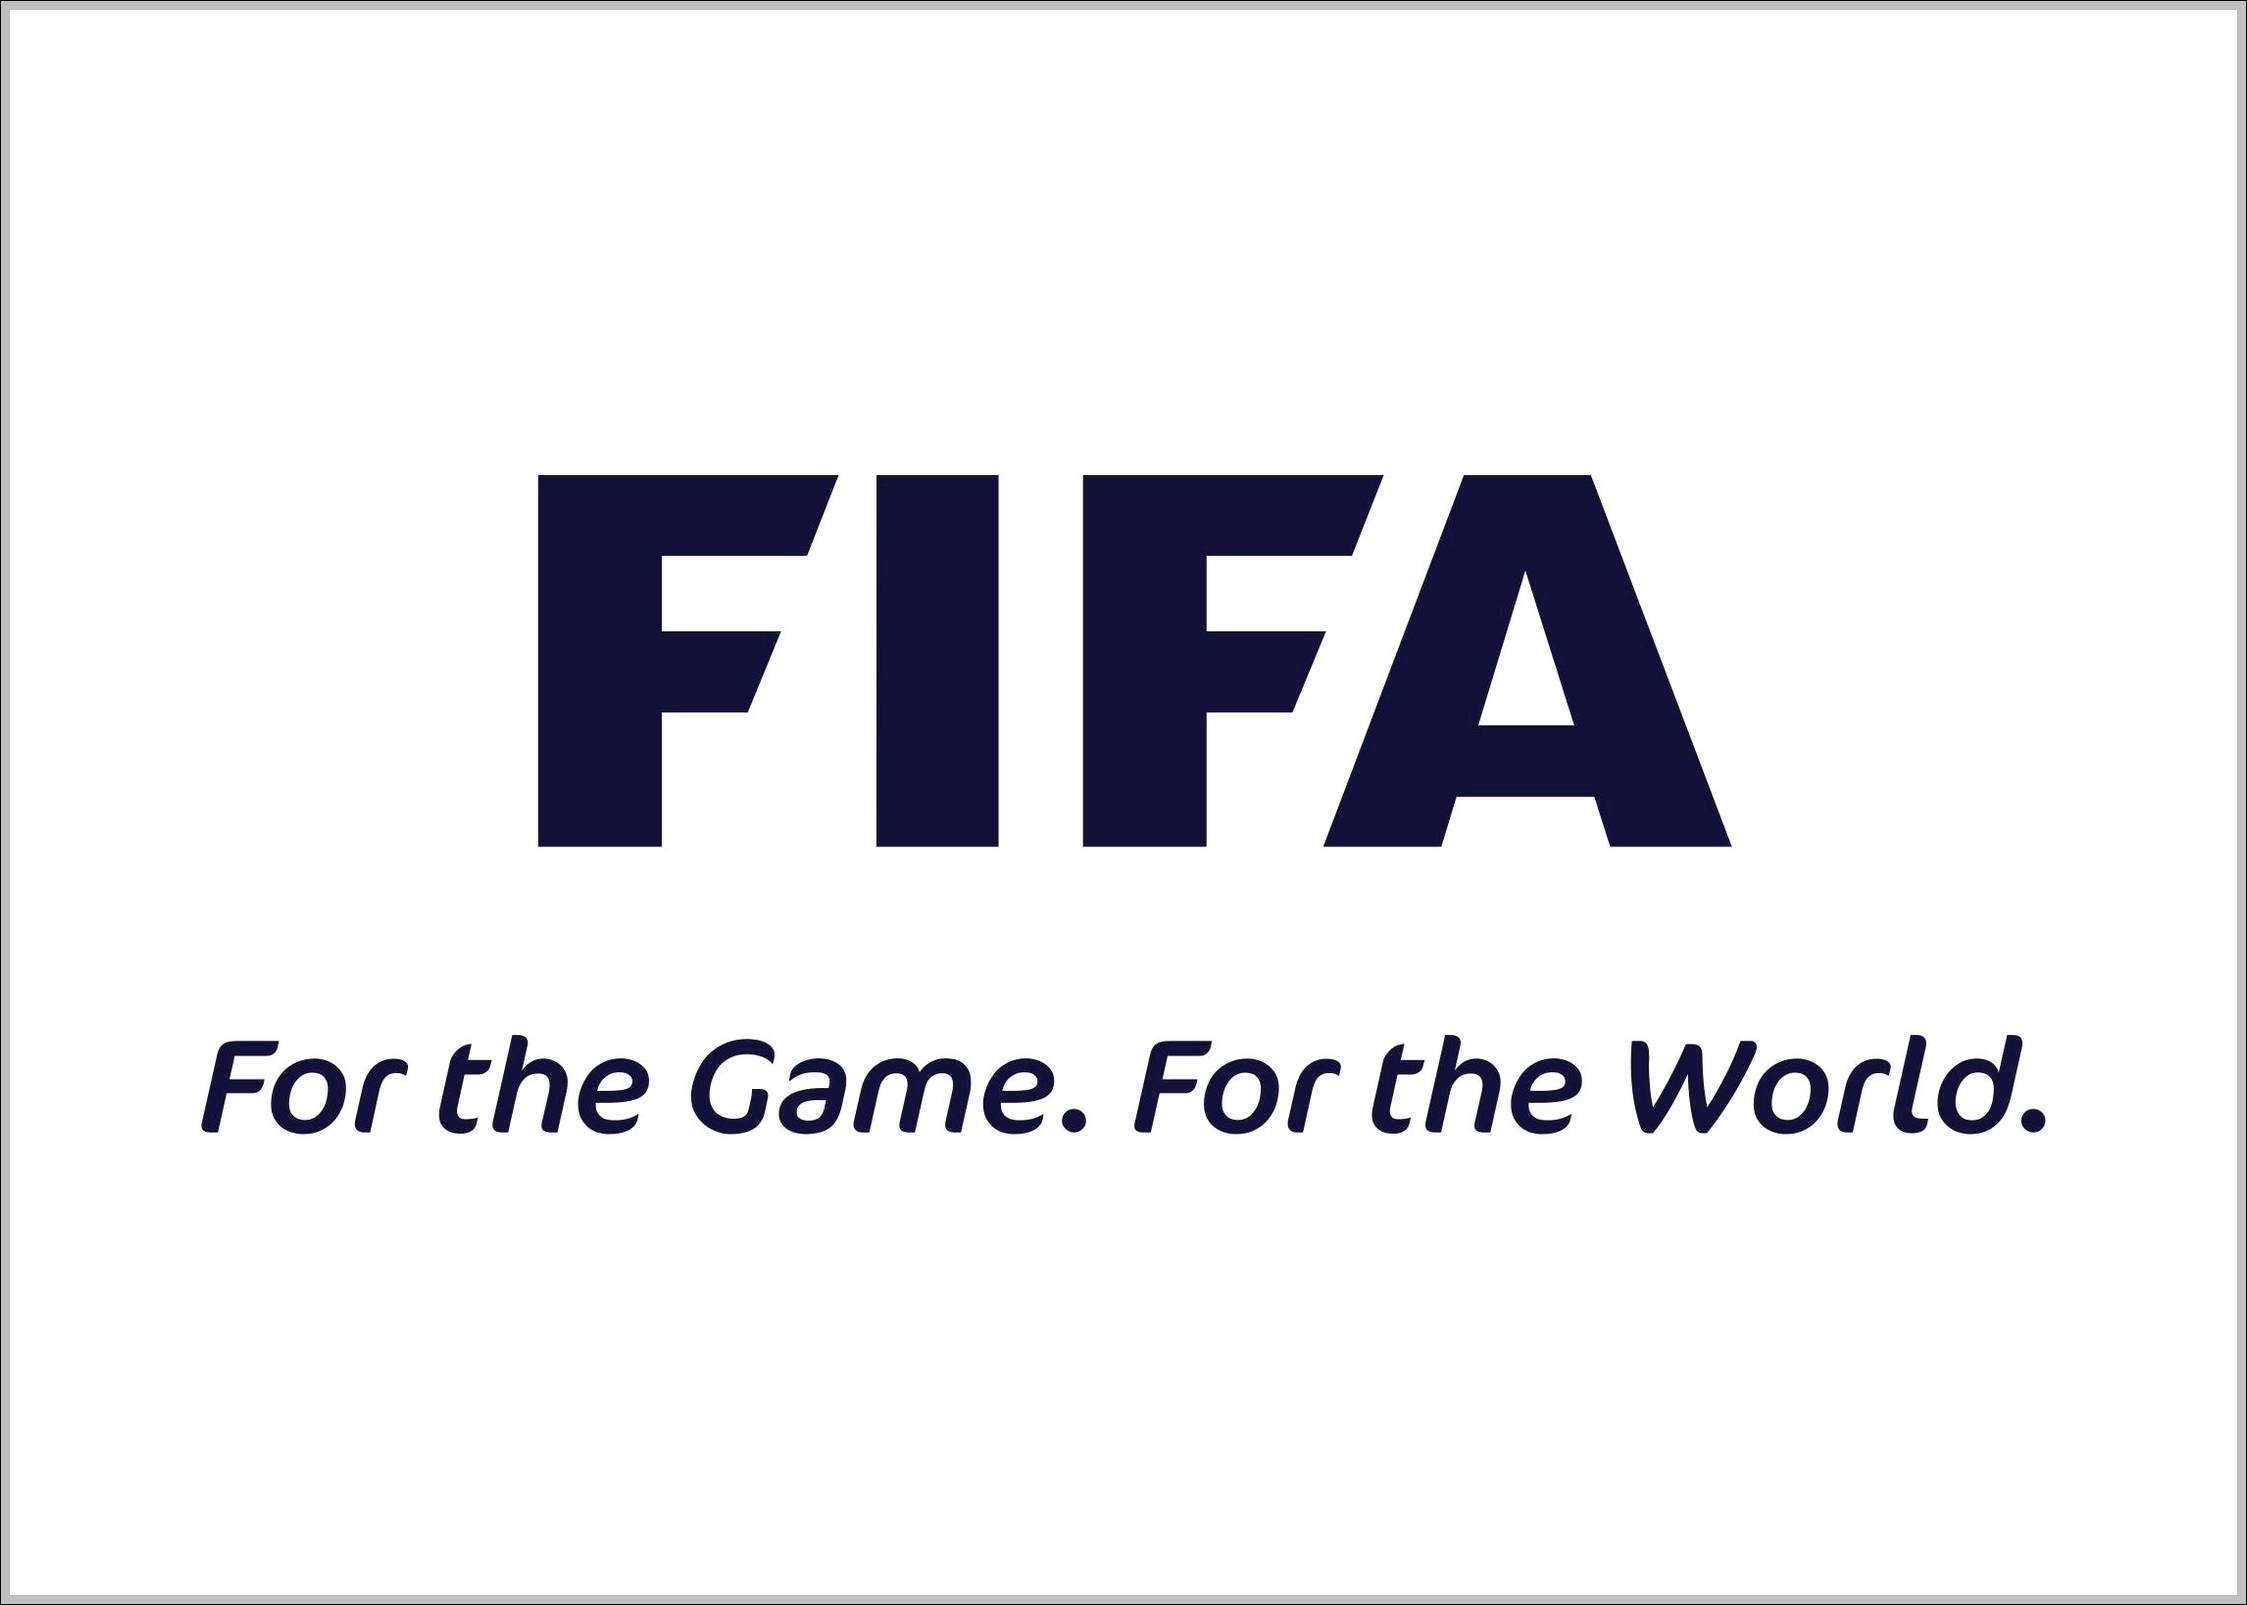 FIFA logo and slogan